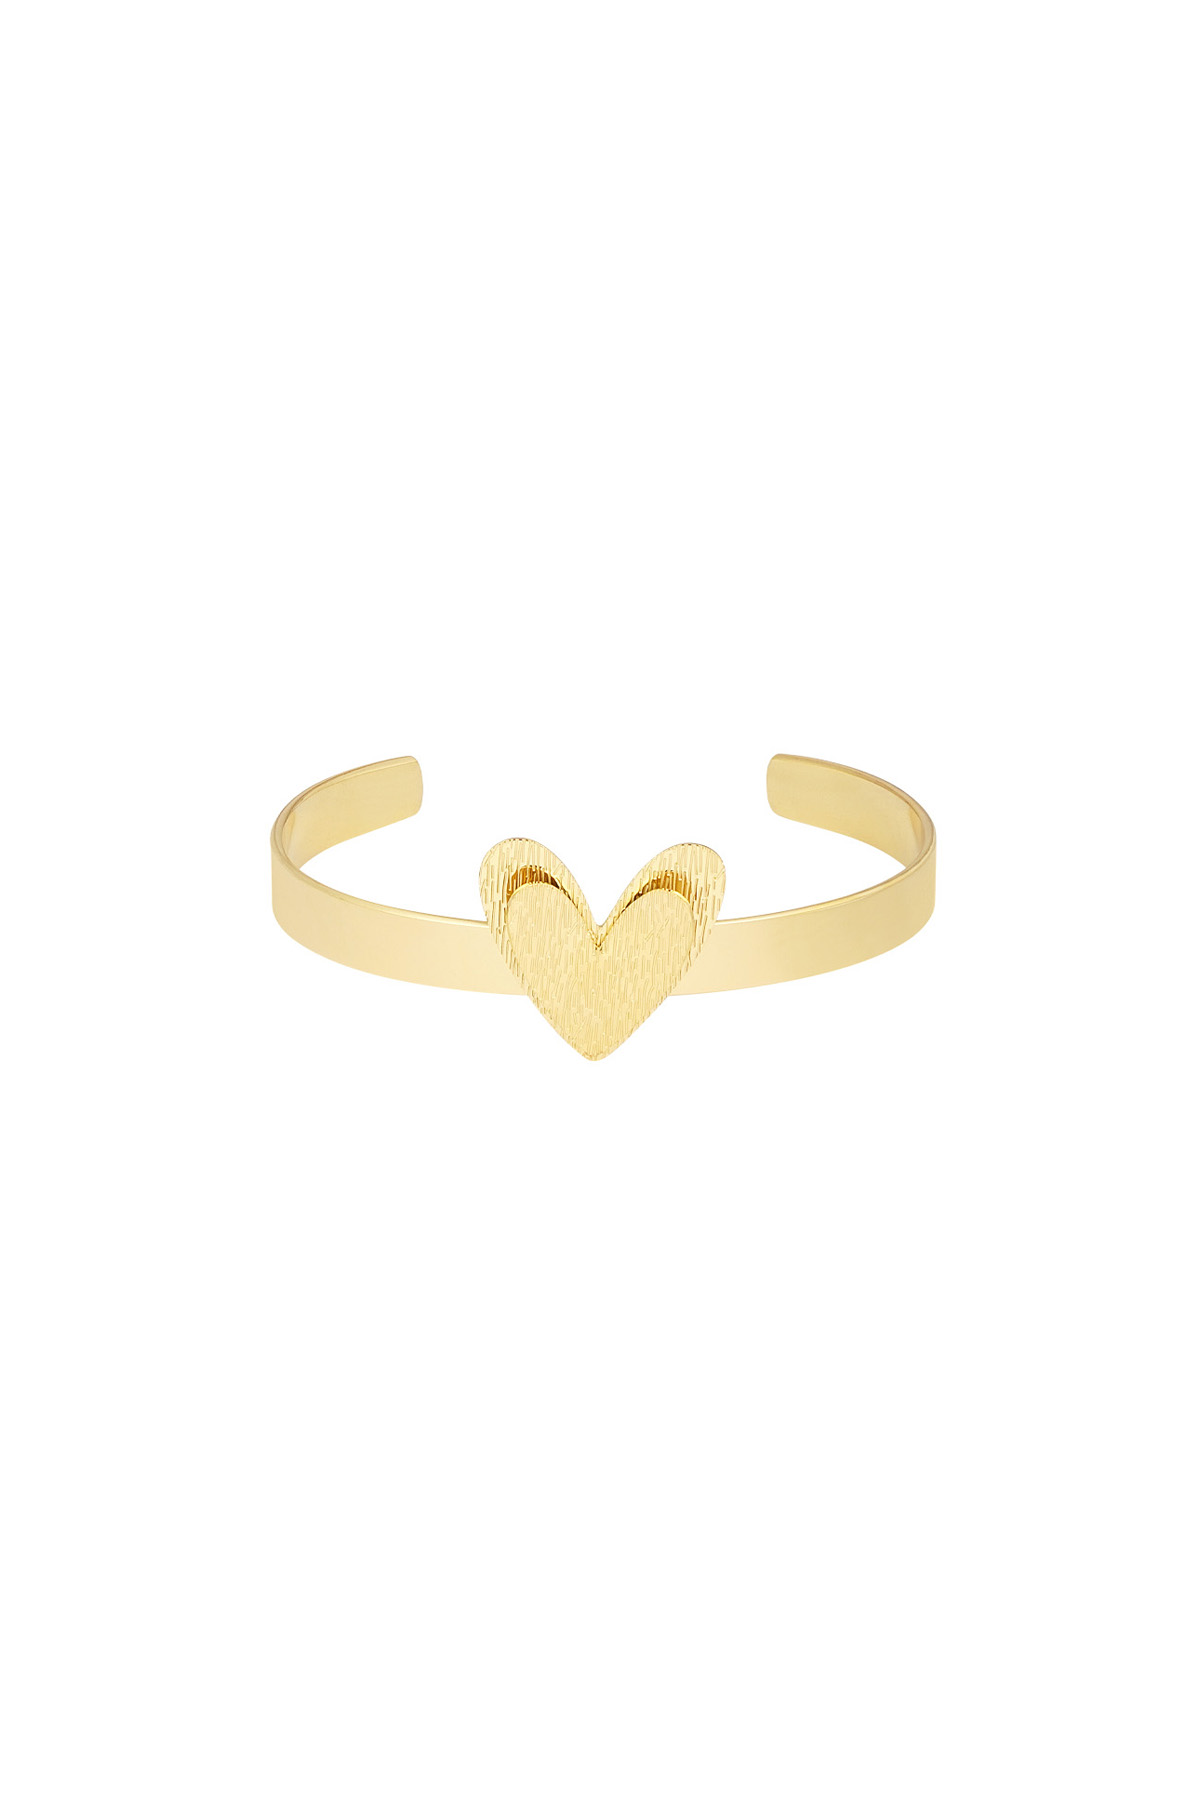 Çift aşk yüzüğü - altın